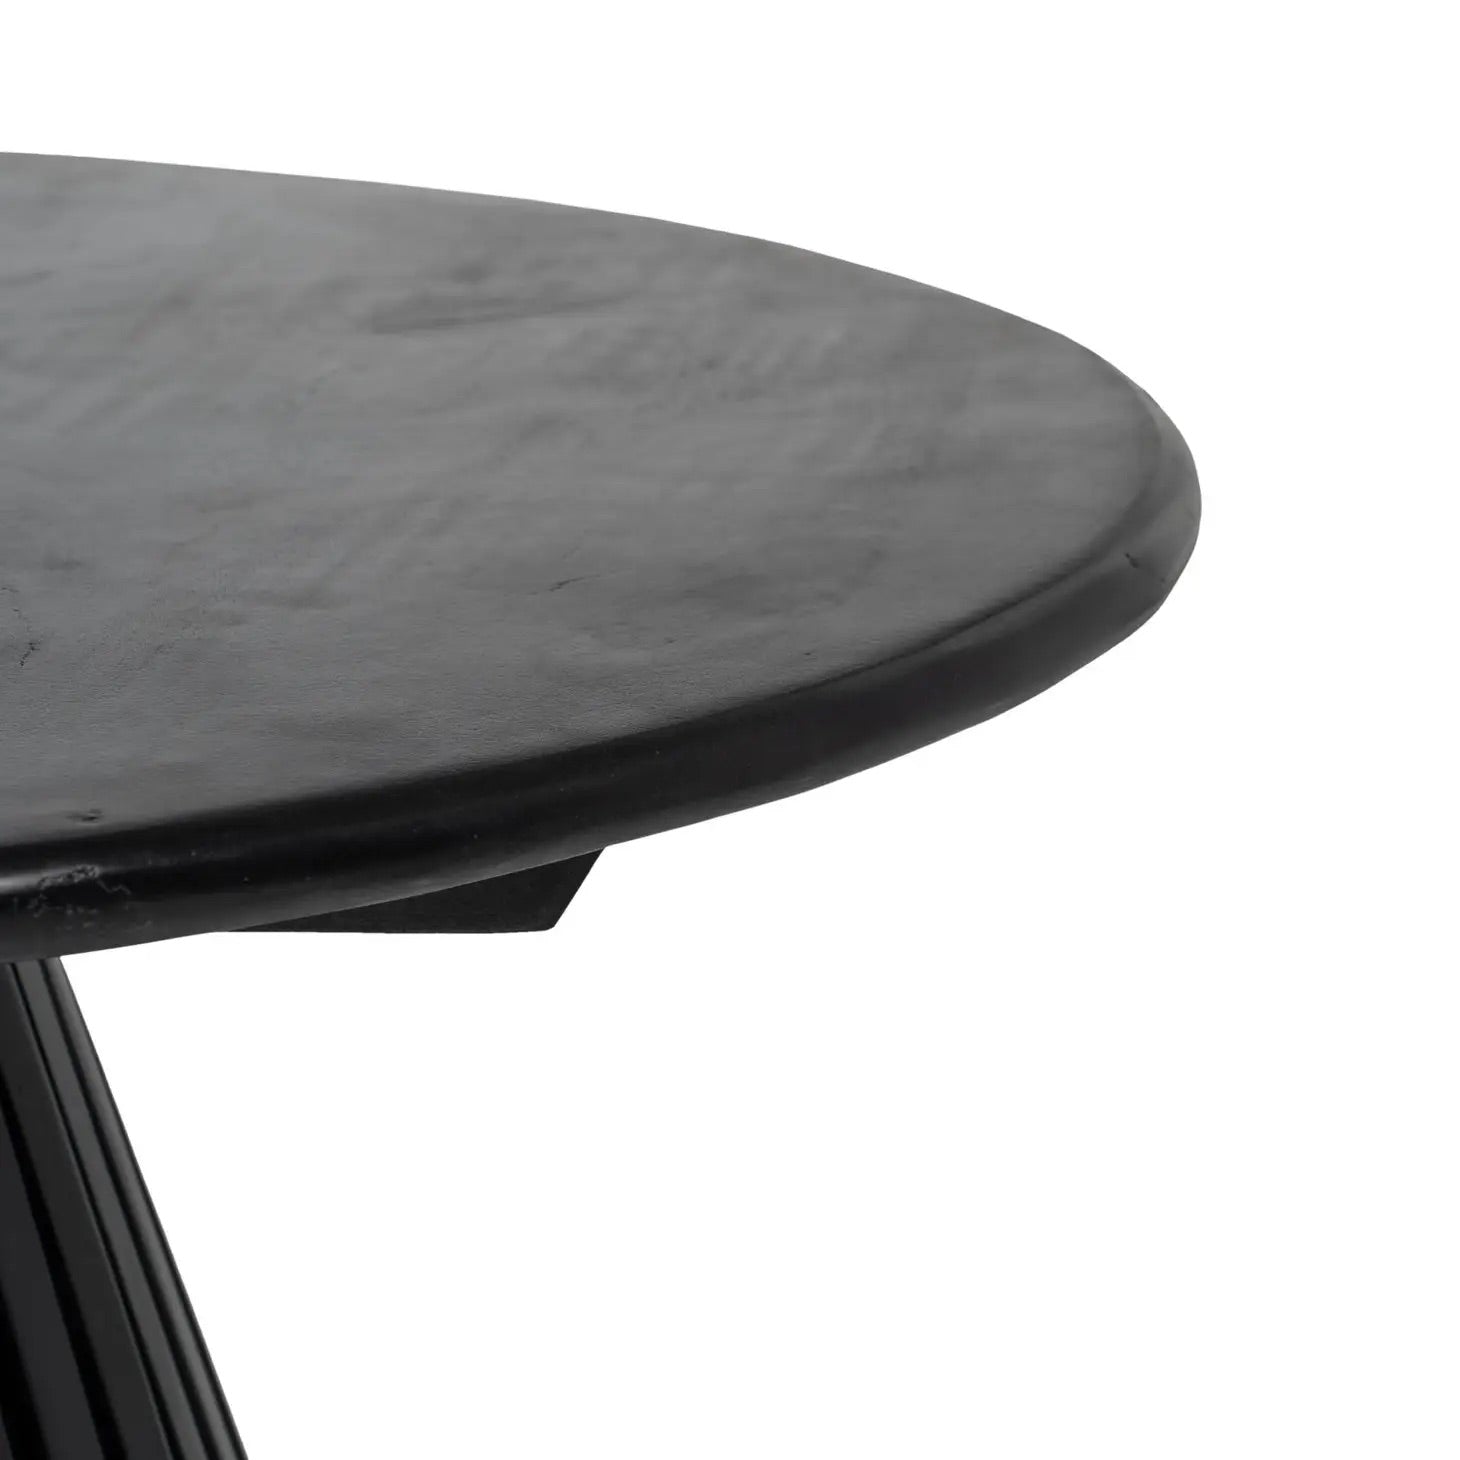 35" Solid Mango Wood Round Black Coffee Table - Slatted Base - Luxurious Natural Organic Designer Chic Modern